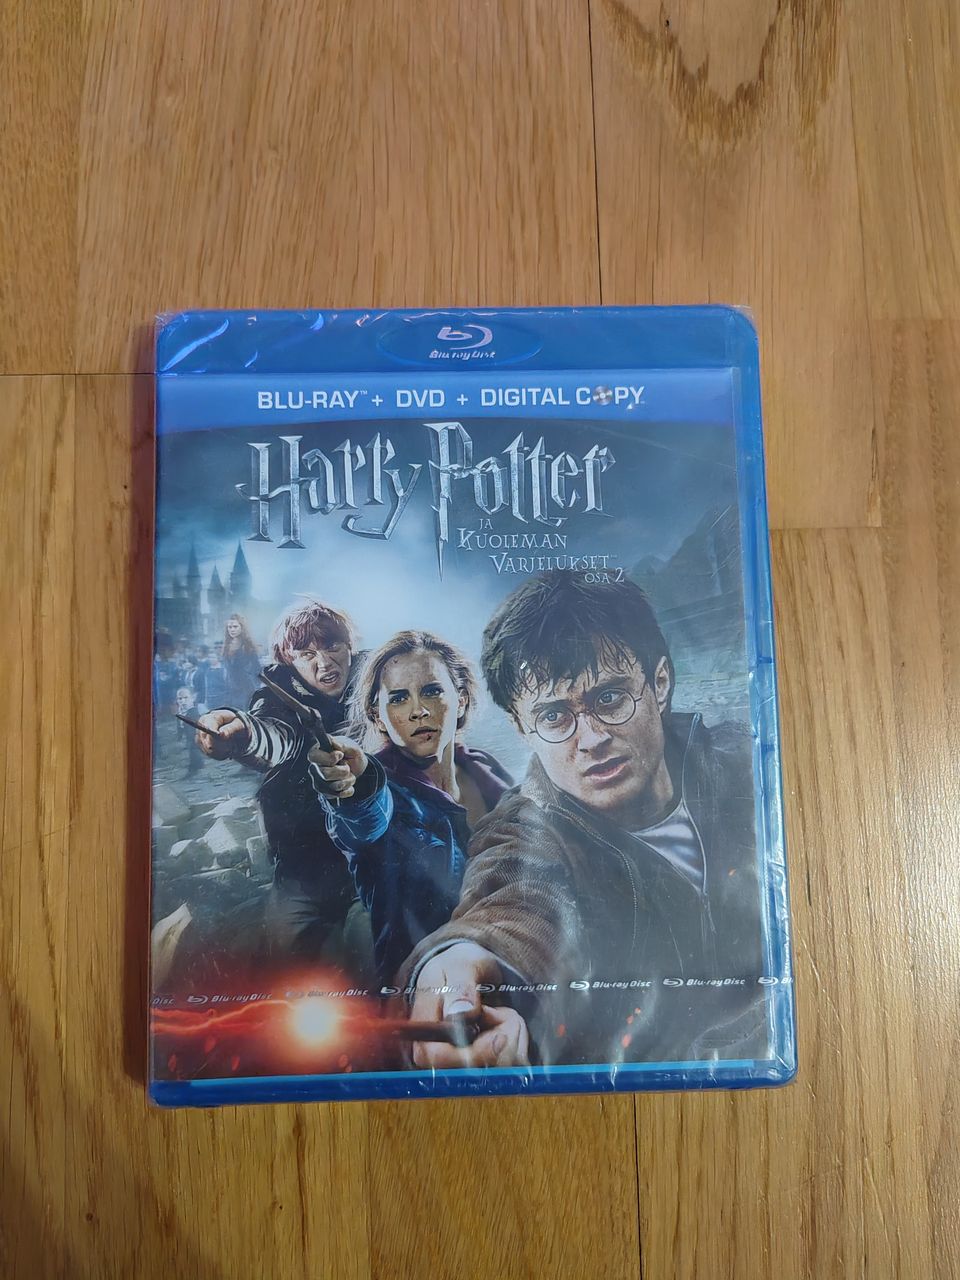 Harry Potter blu-ray